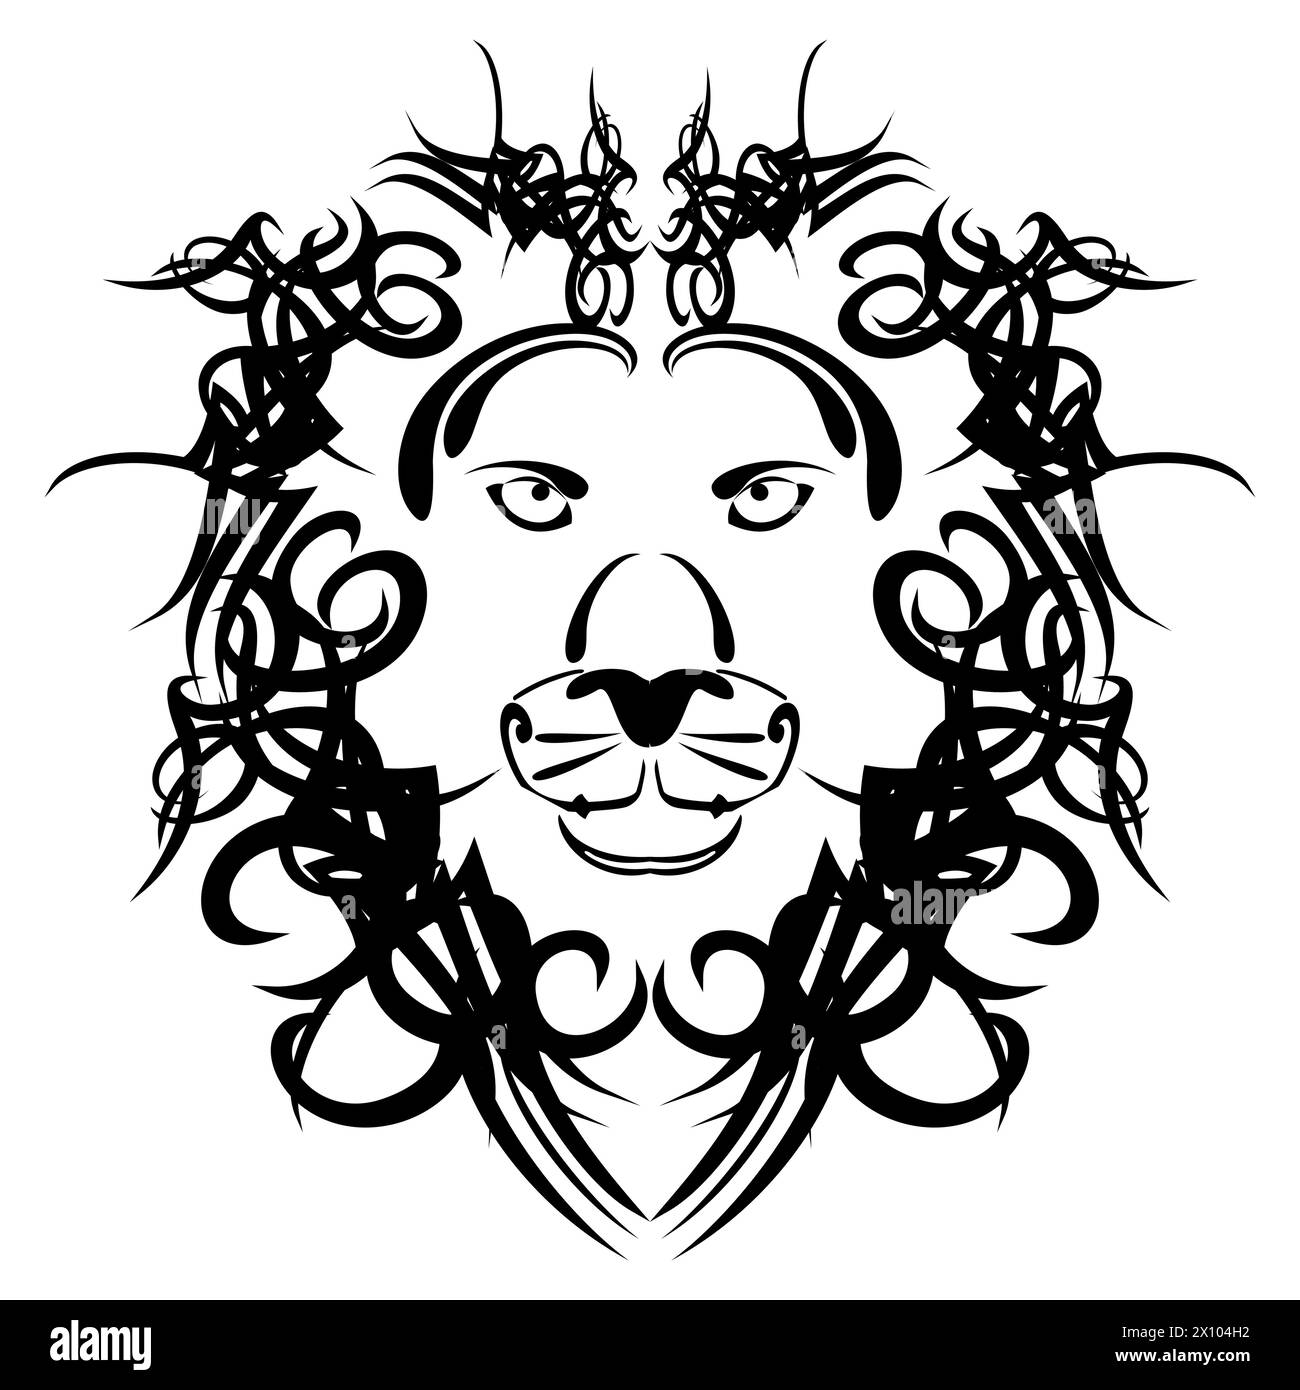 lion head tribal tattoo illustration in vector format Stock Vector